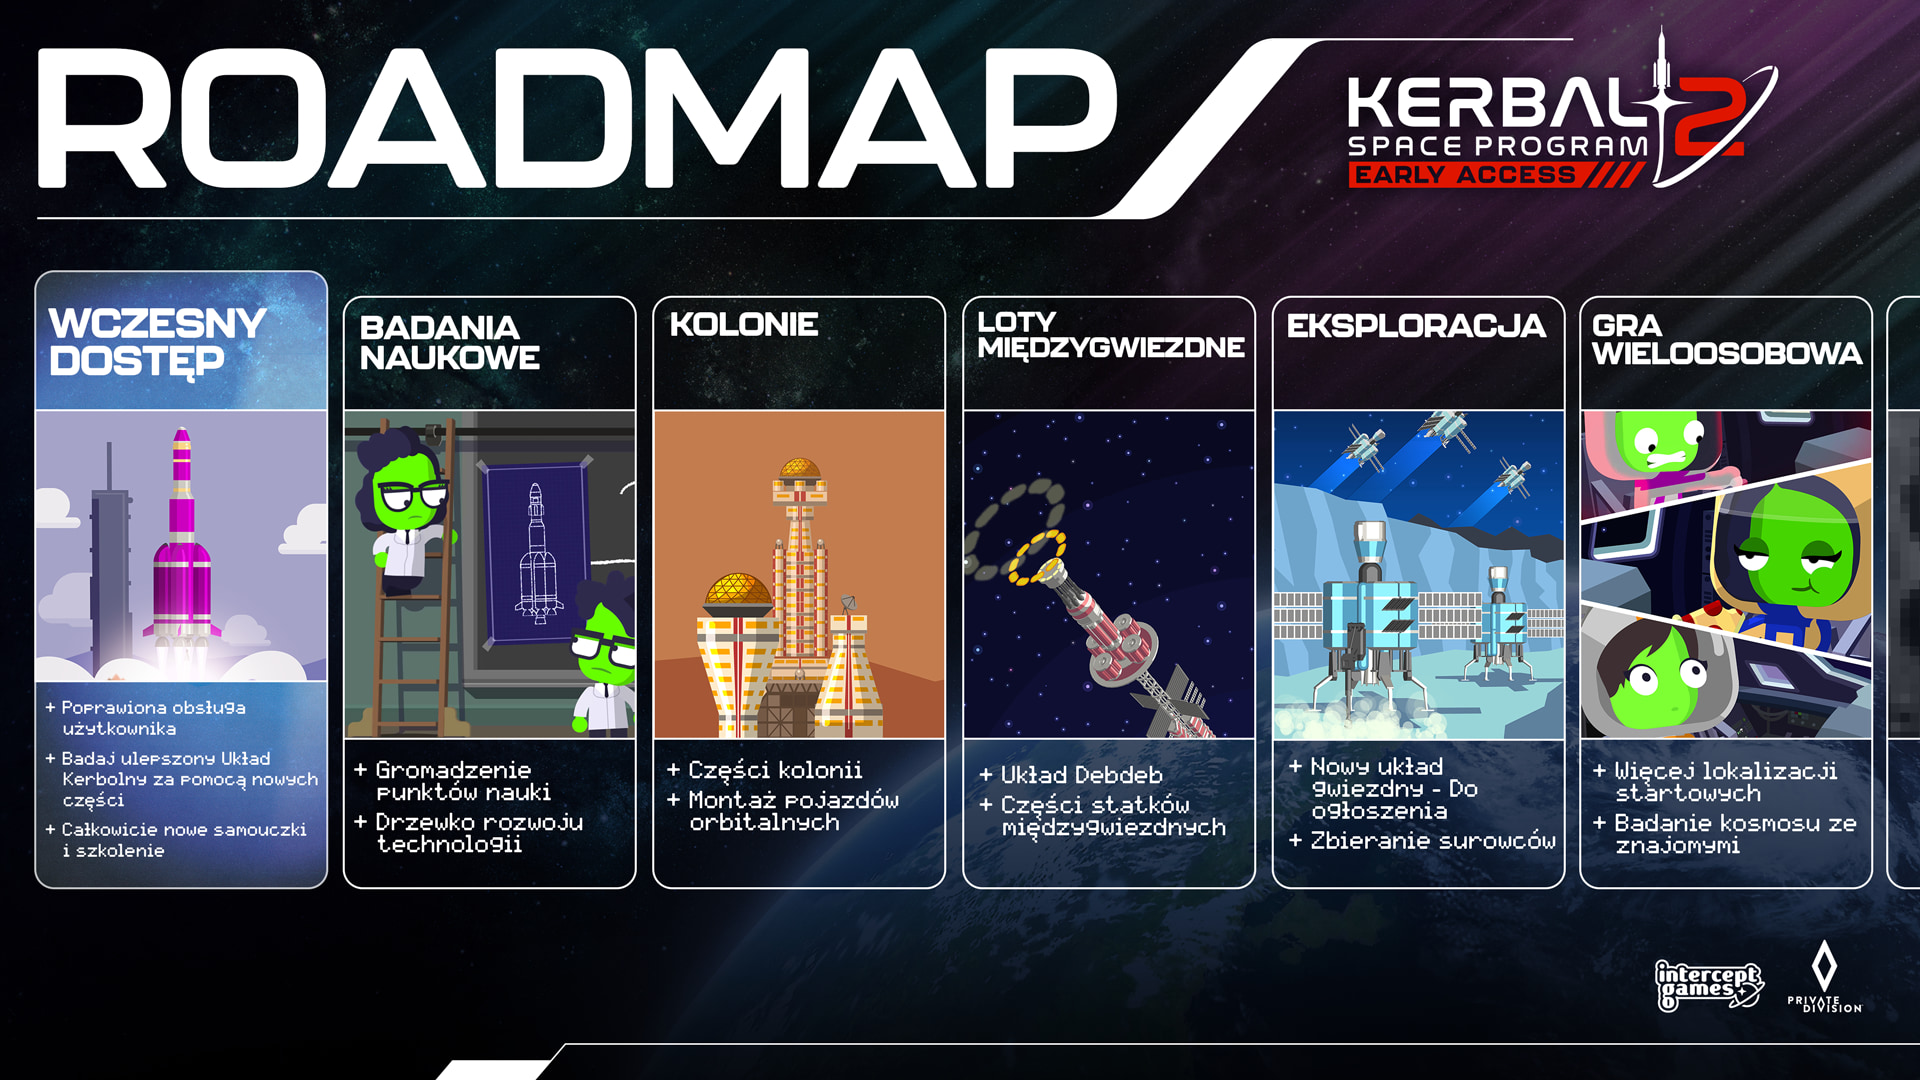 KSP2 Steam About ROADMAP PL